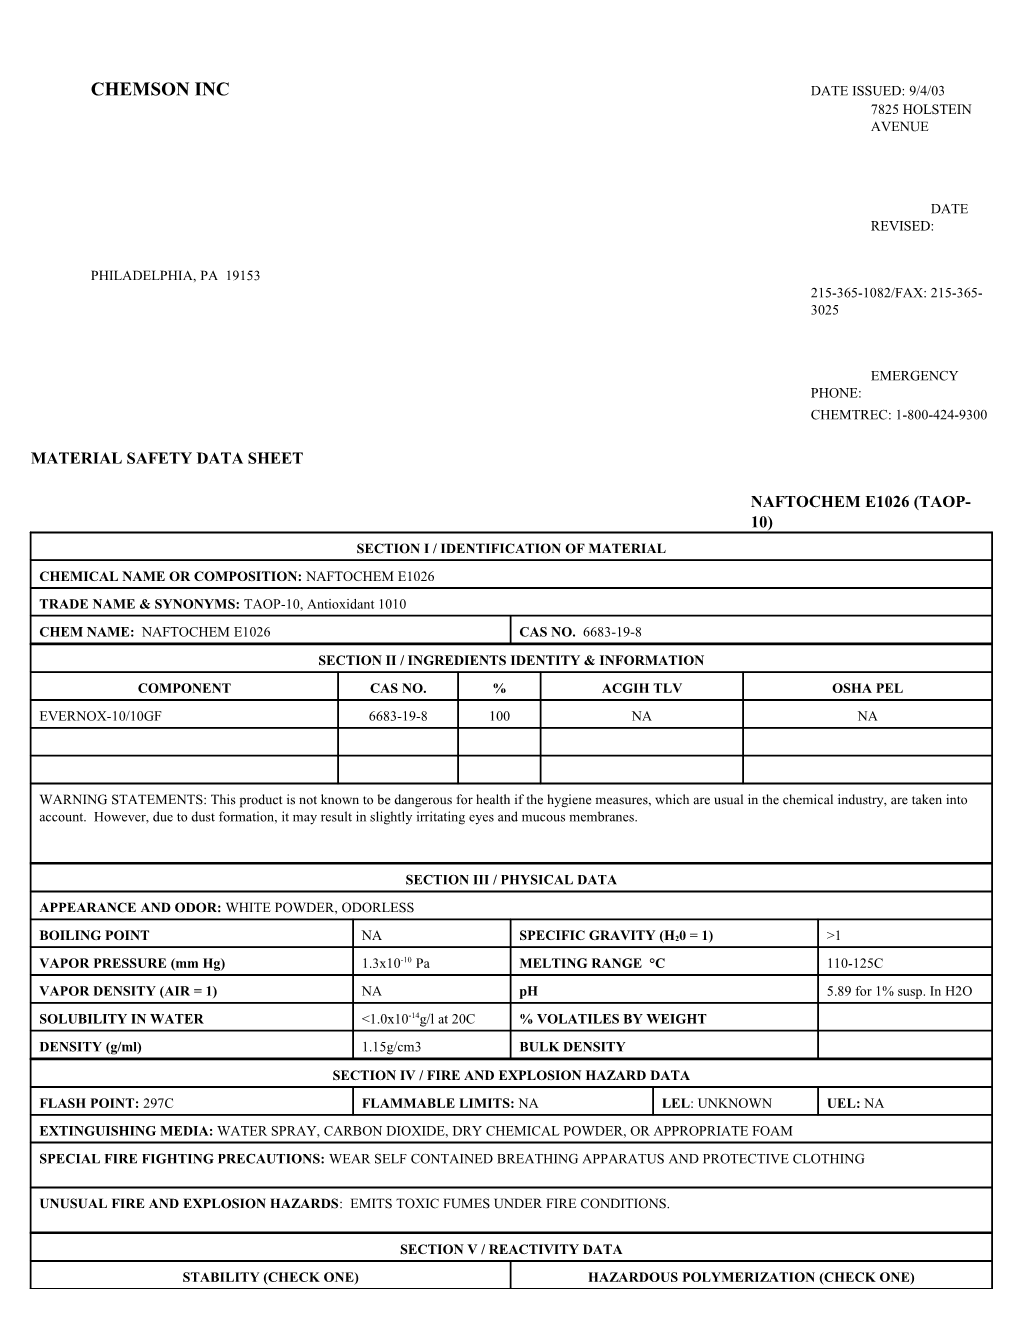 Material Safety Data Sheet Naftochem E1026 (Taop-10)